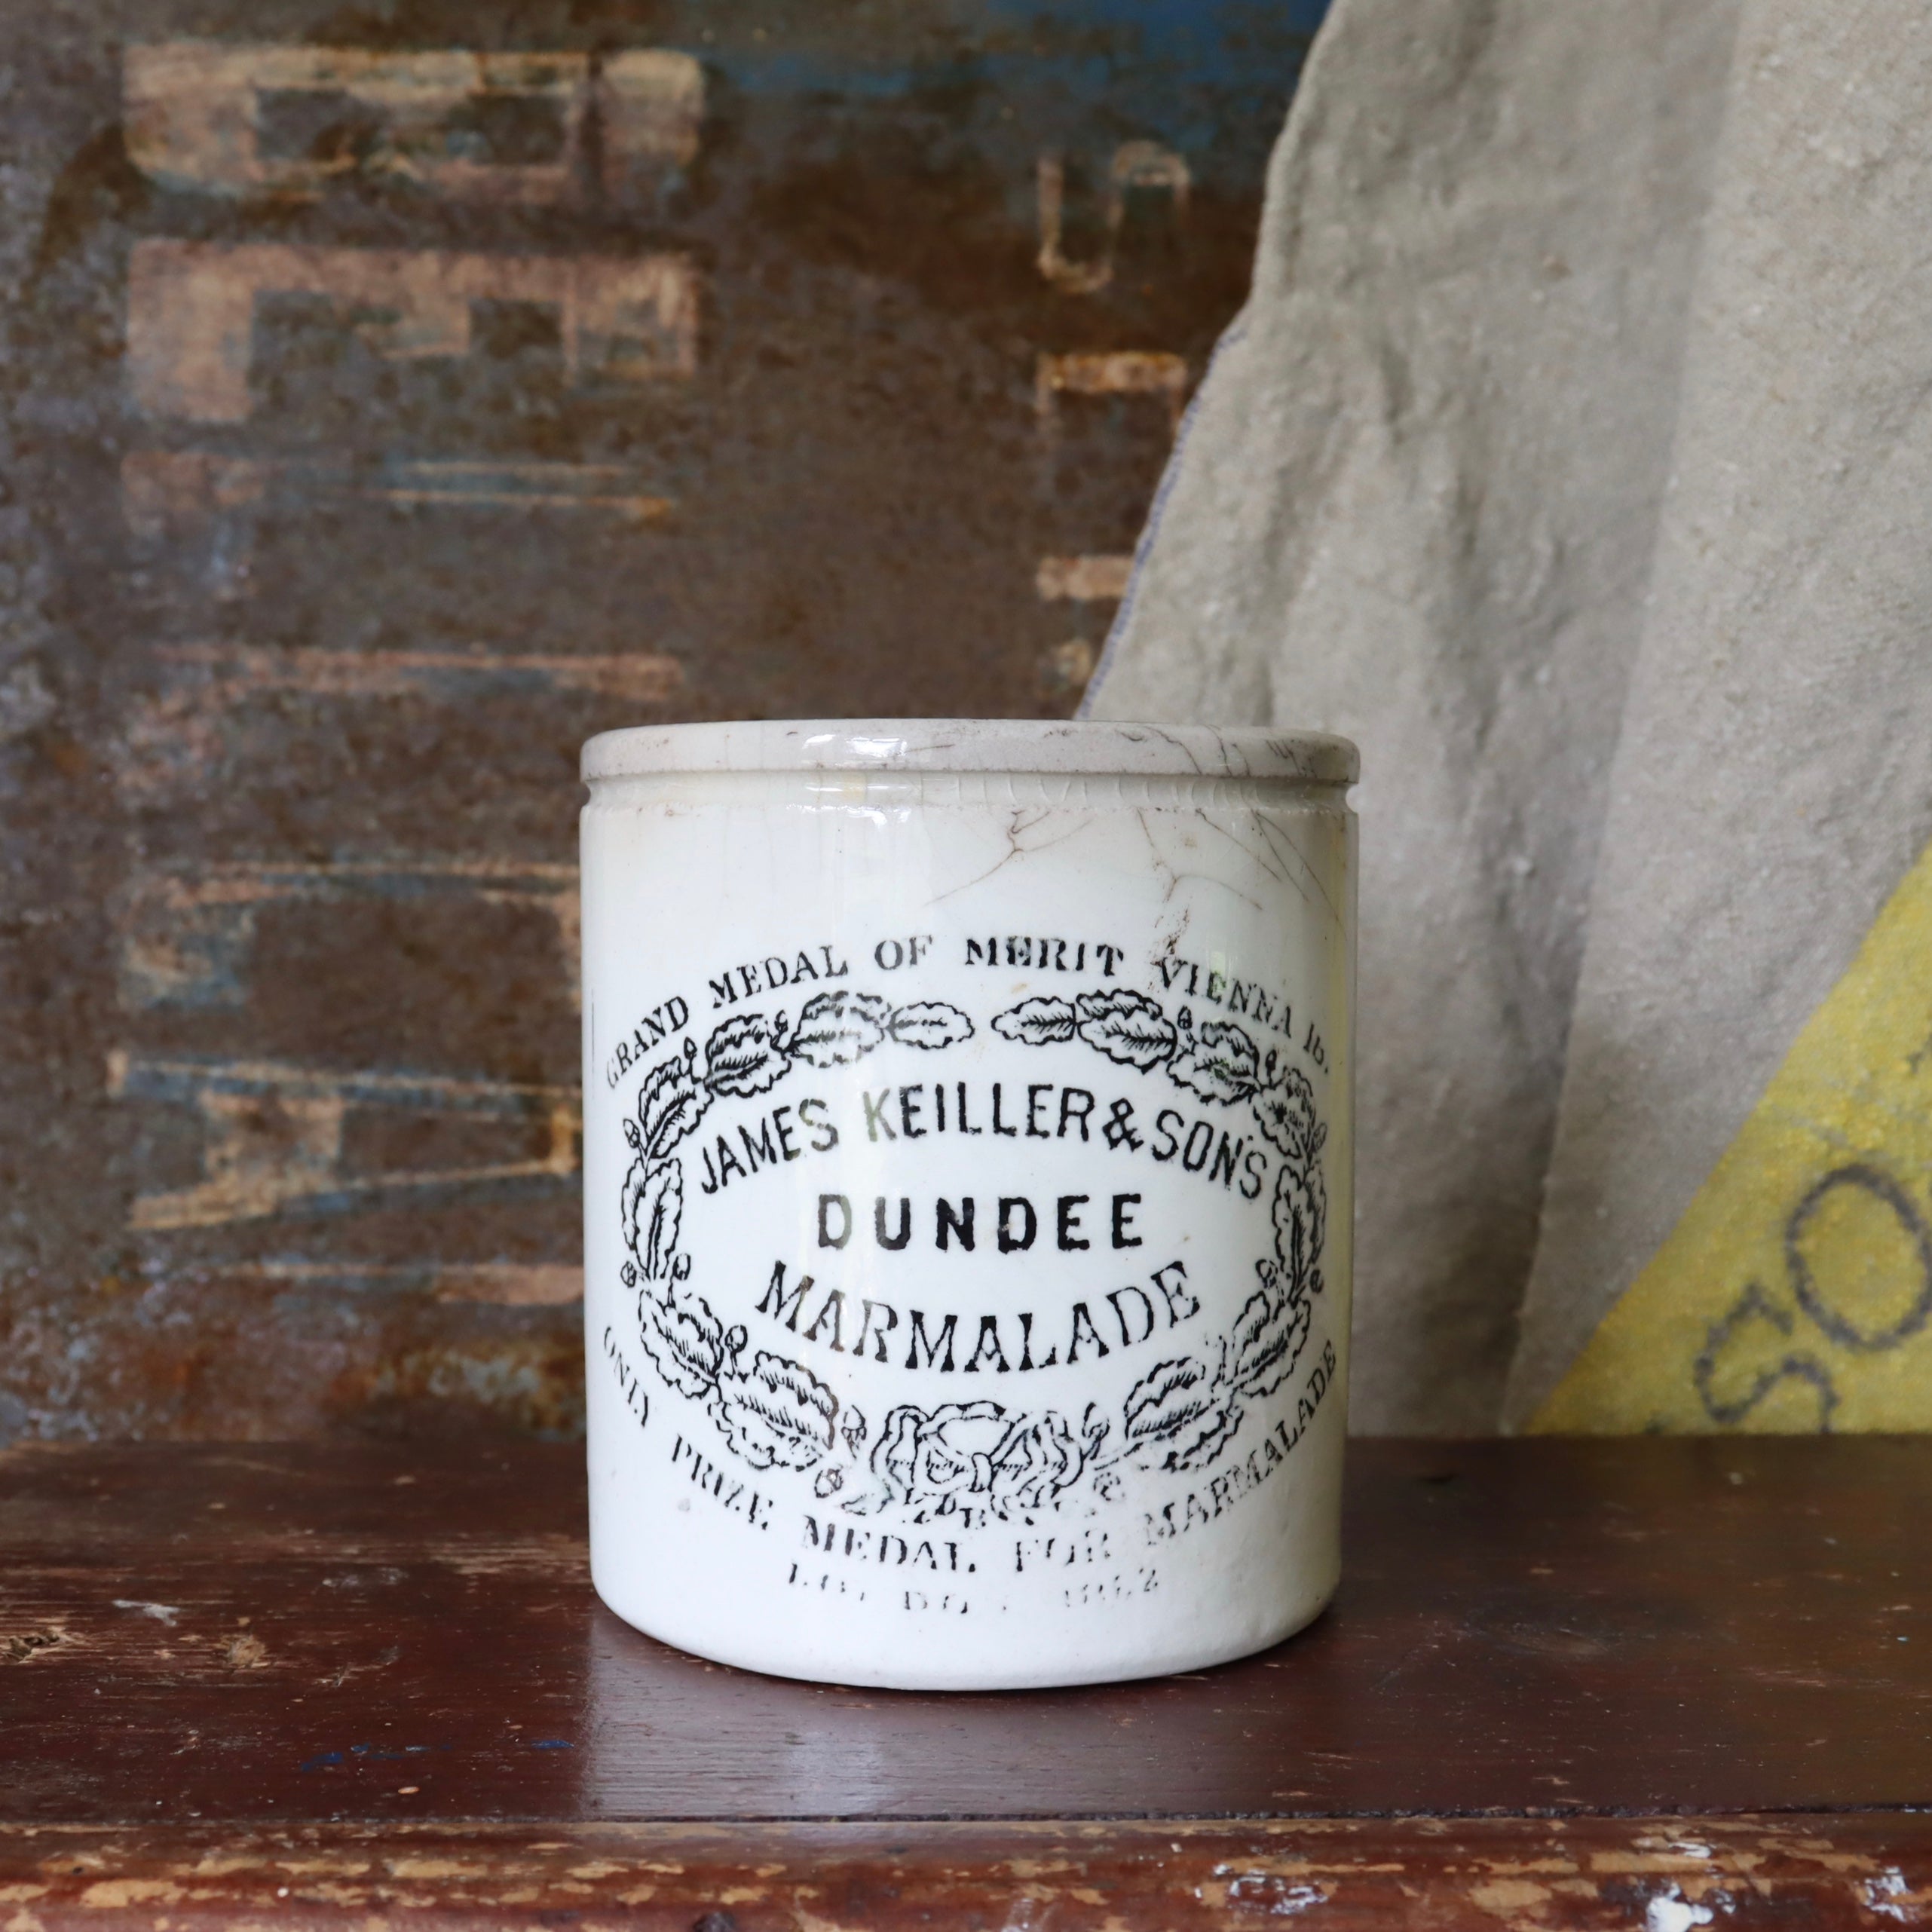 James Keiller & Son's Dundee 1lb Marmalade Pots